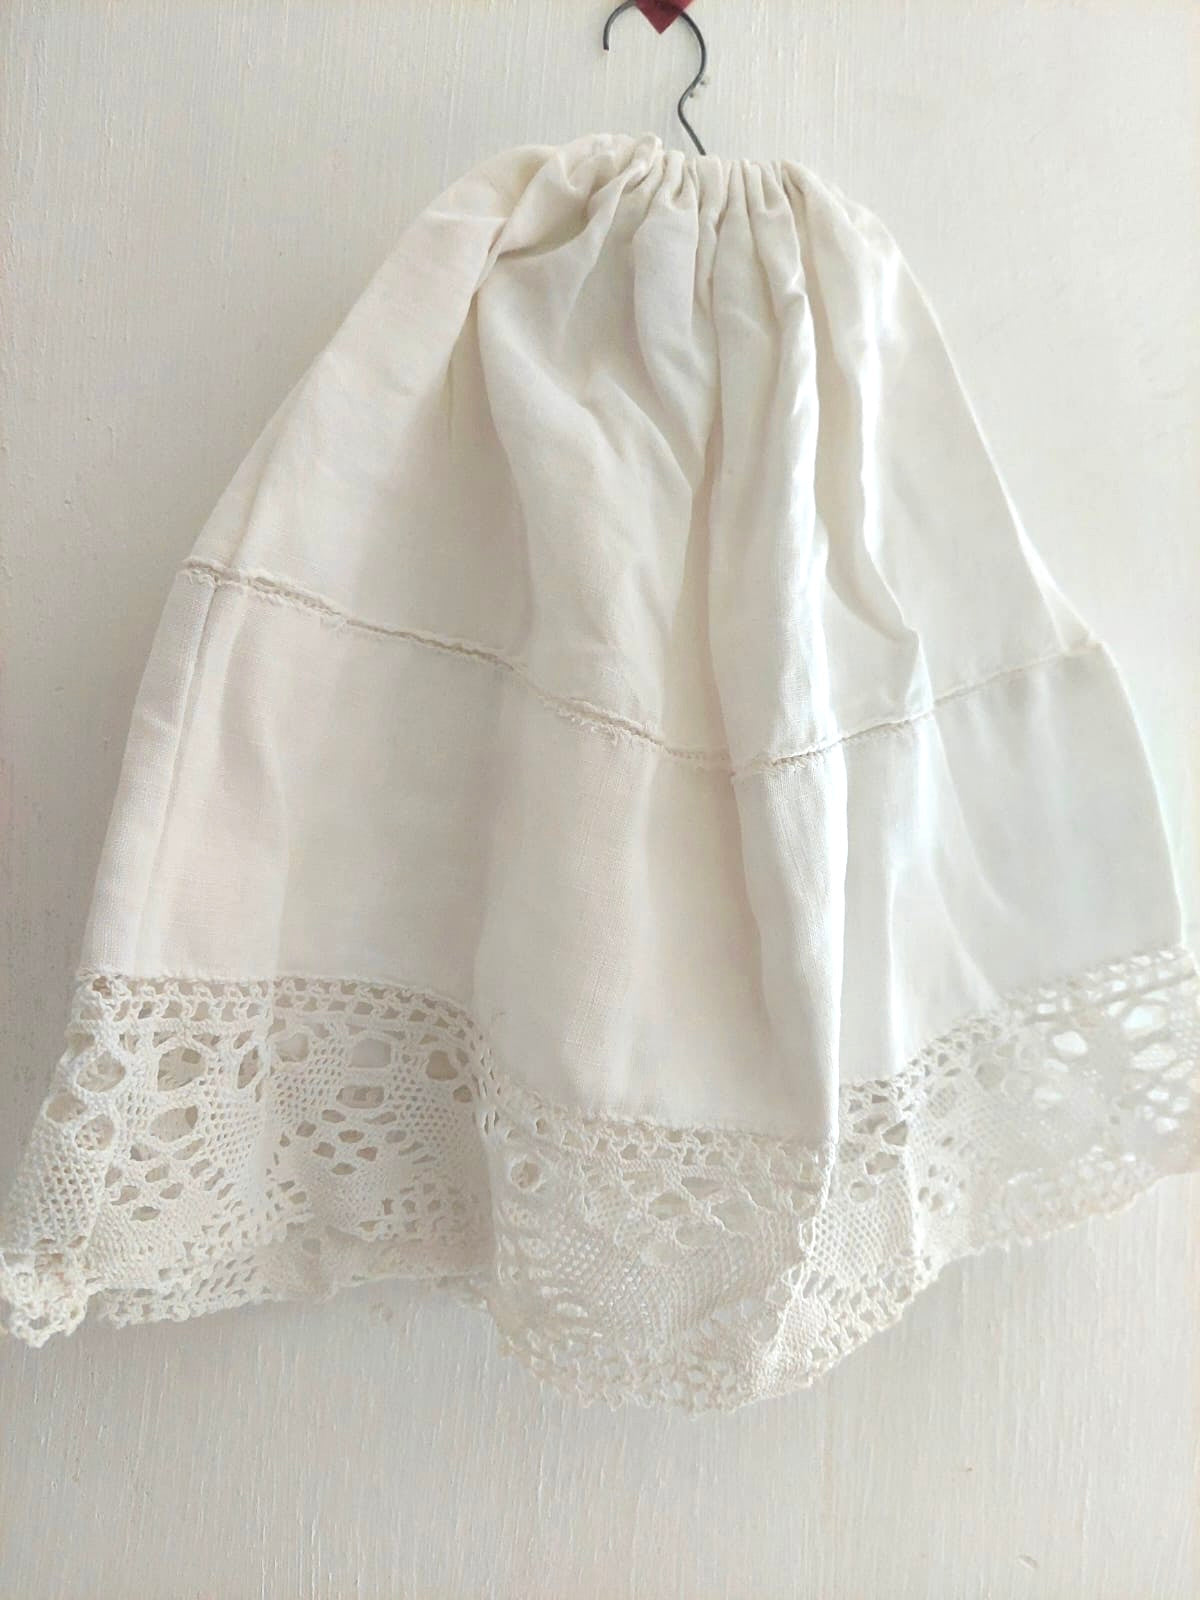 Old linen doll's petticoat